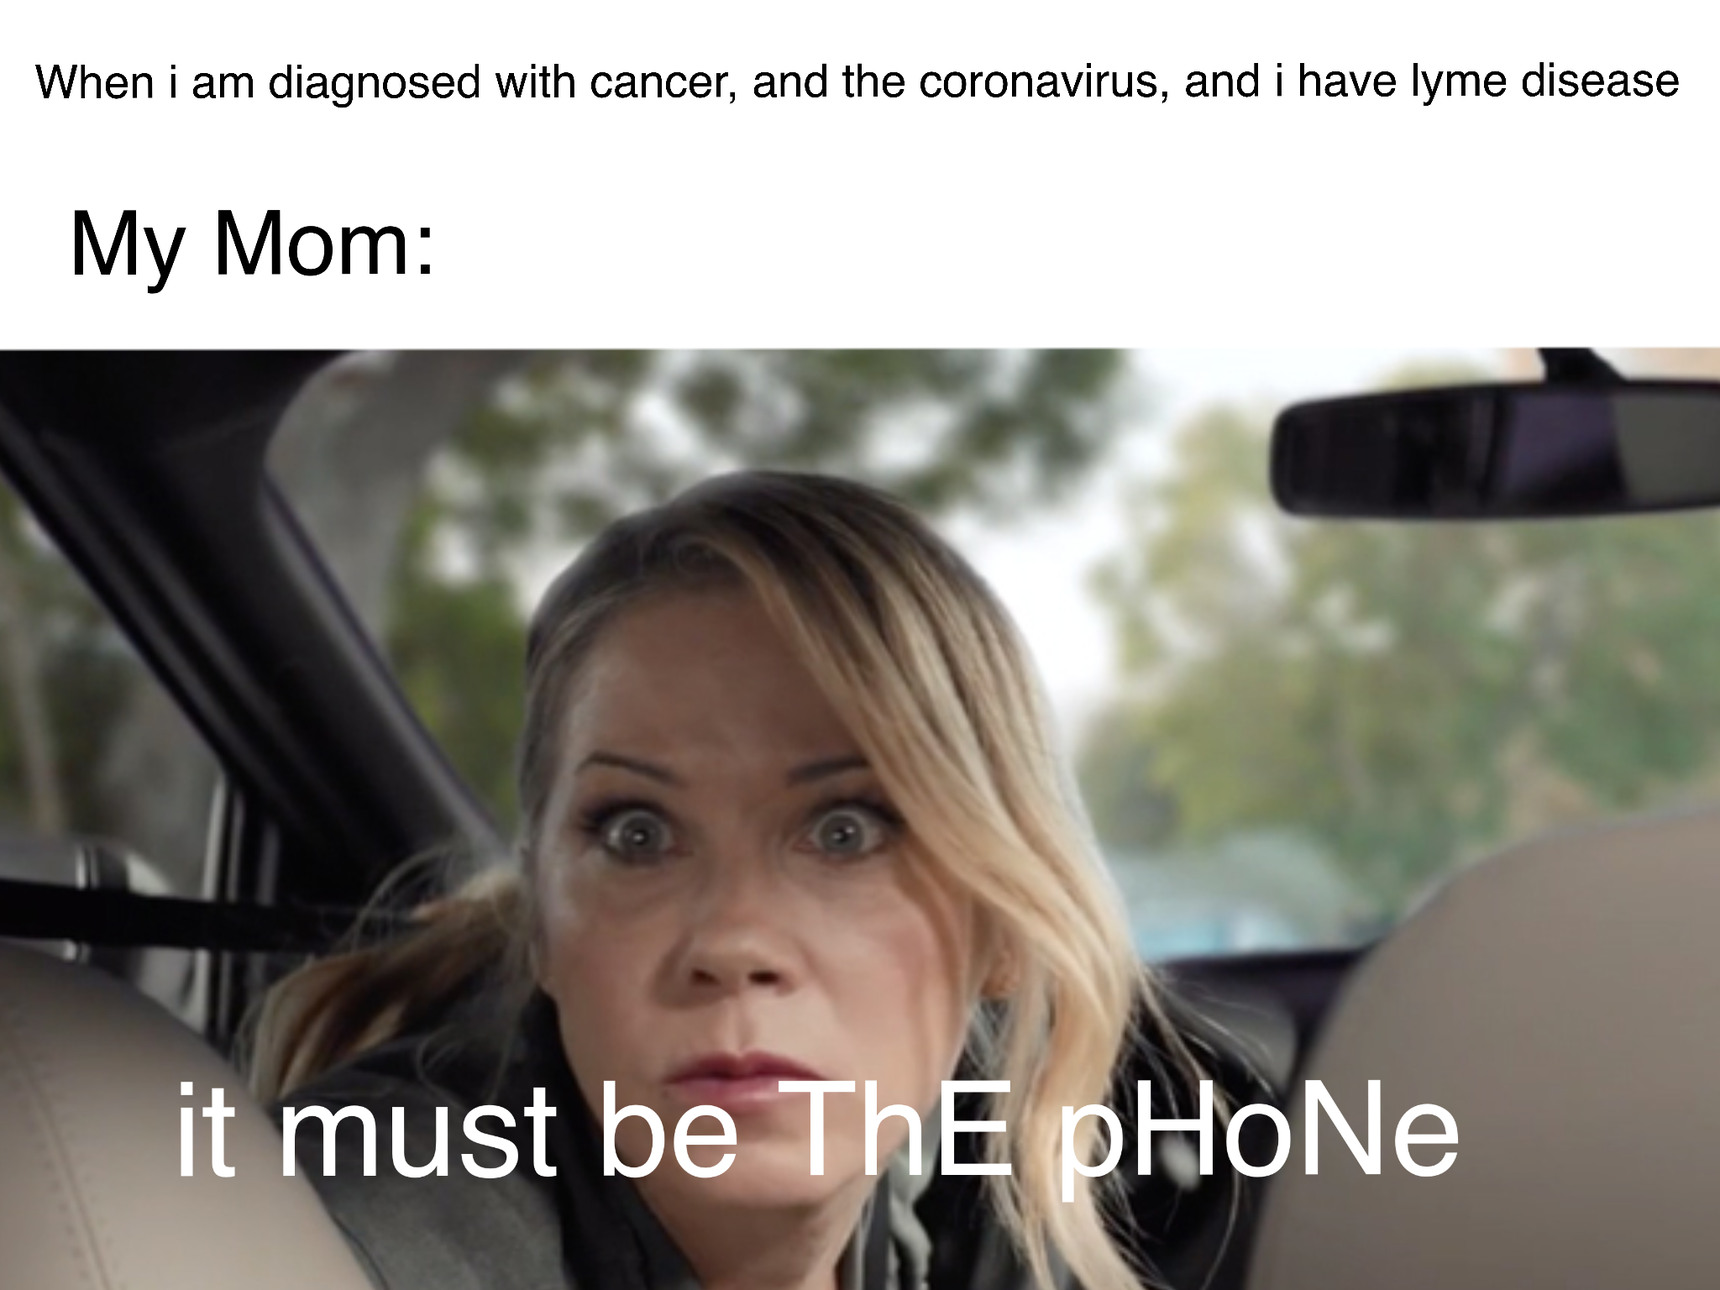 ahh yes the phone - meme